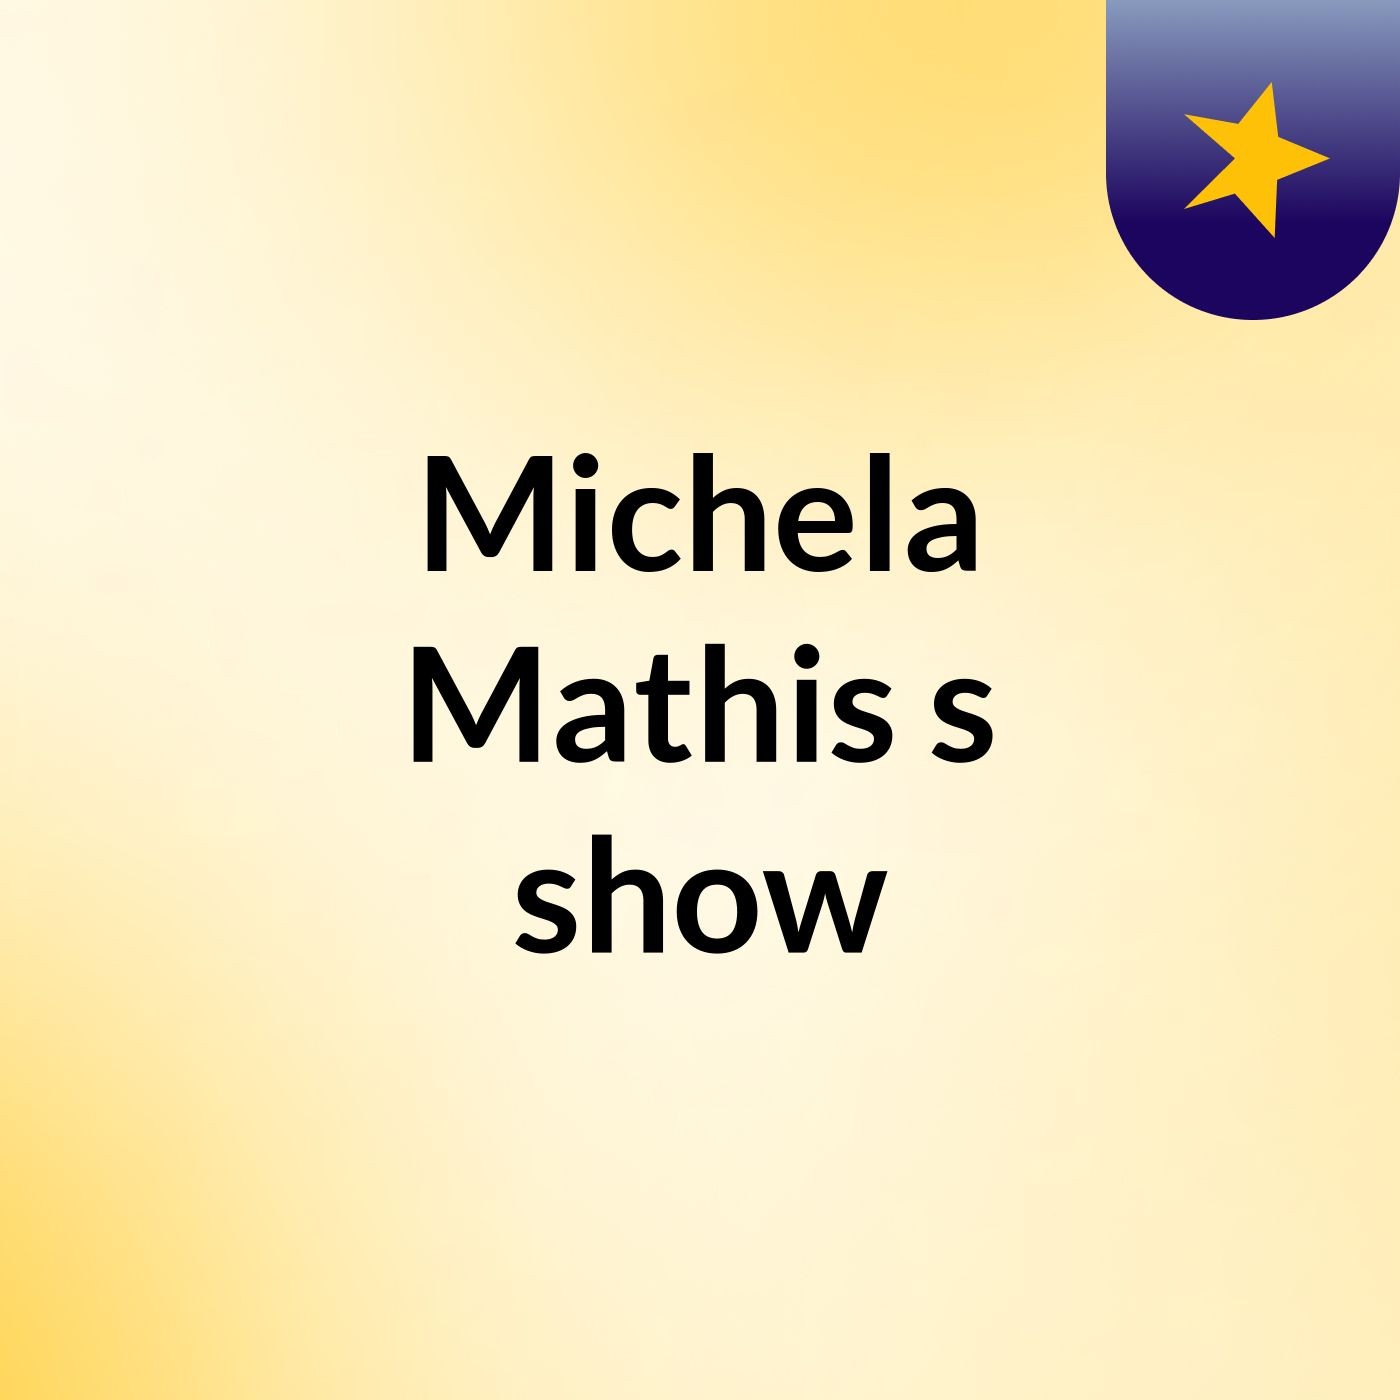 Michela Mathis's show